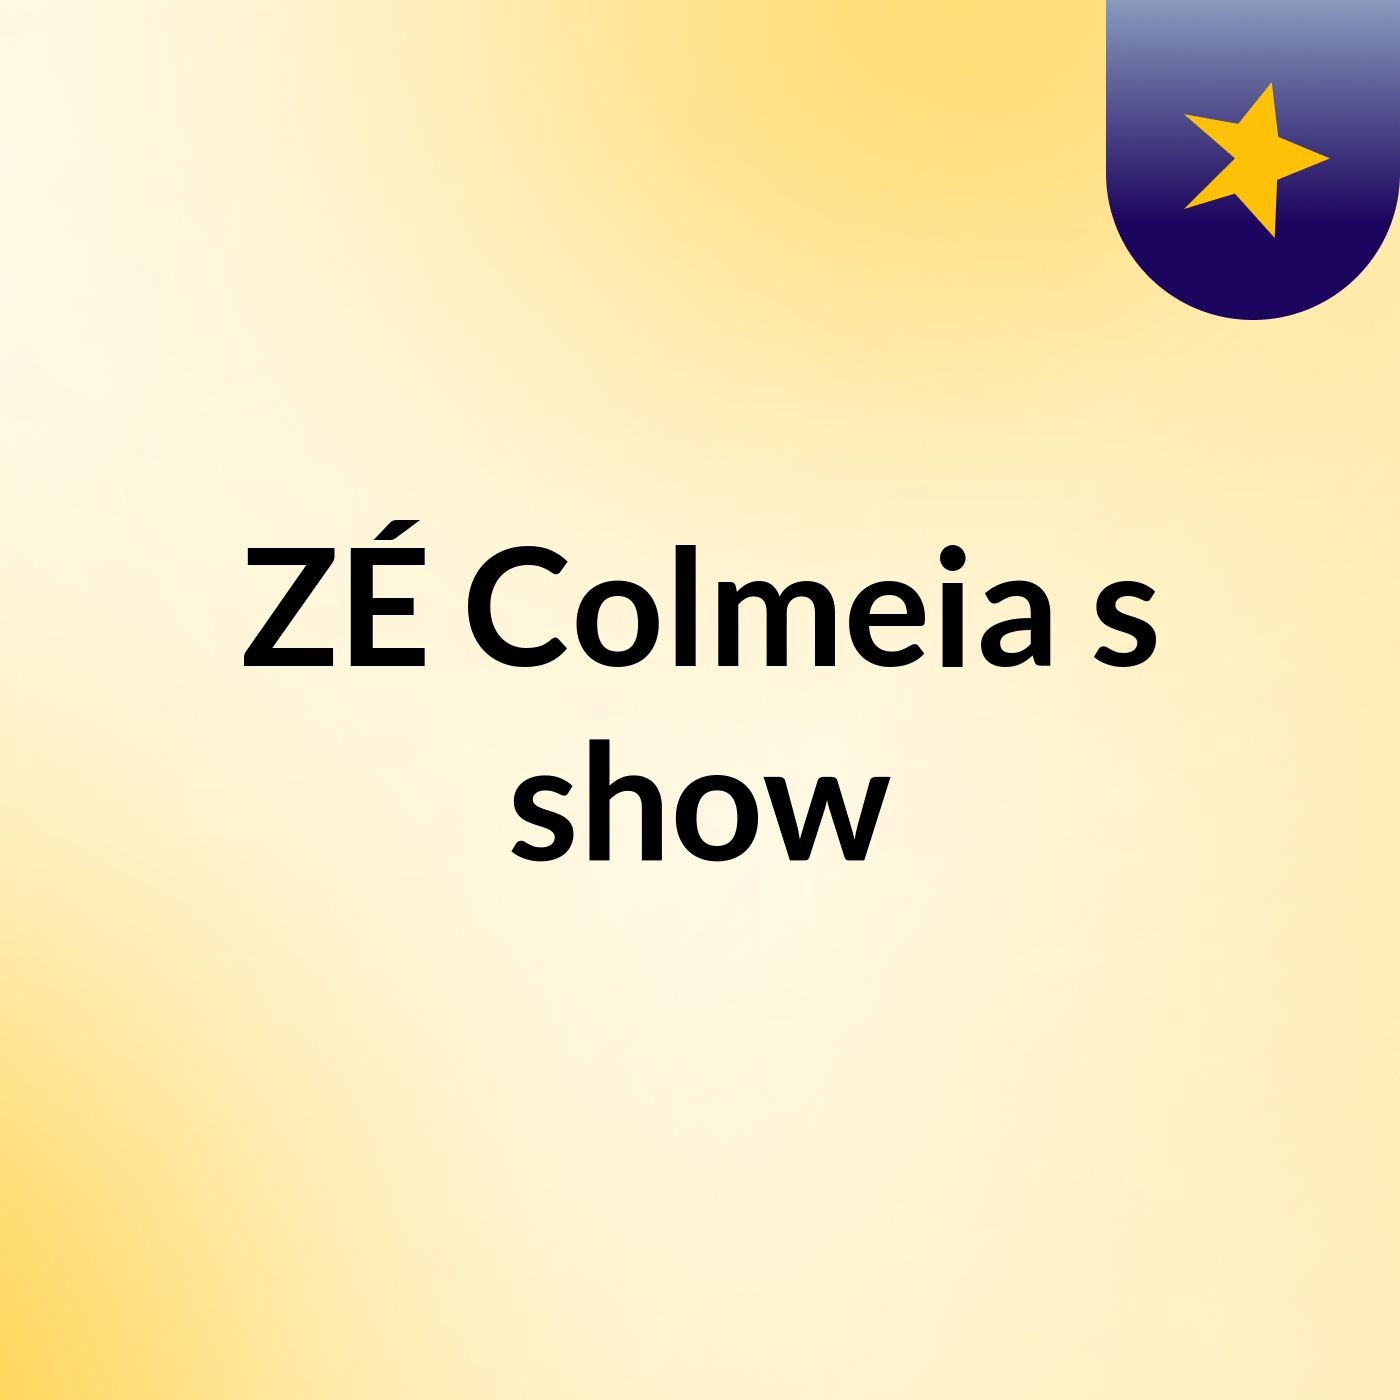 ZÉ Colmeia's show